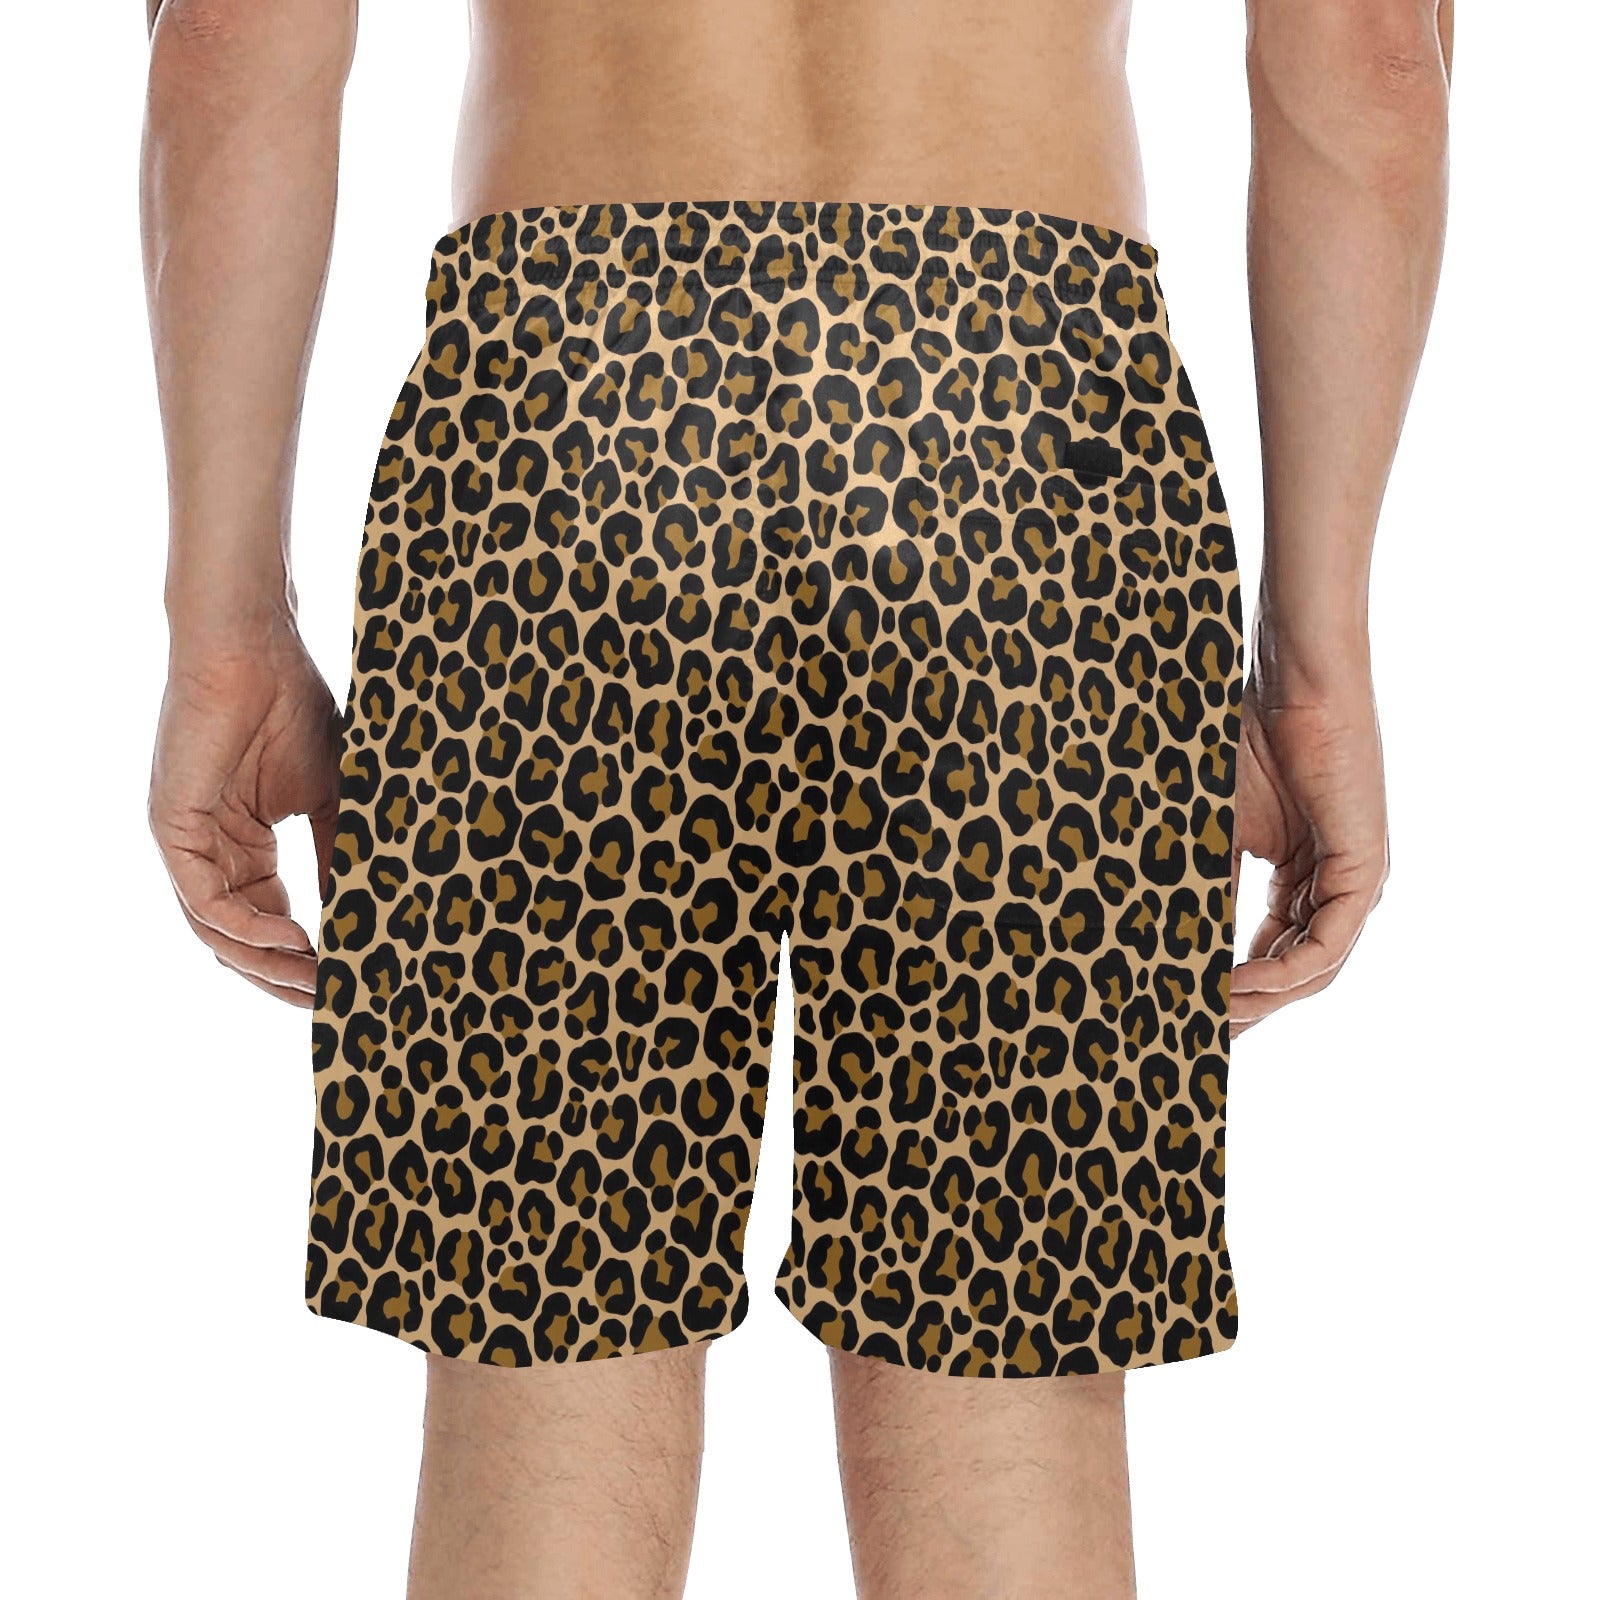 Leopard Men Swim Trunks, Mid Length Shorts Animal Print Beach Pockets Mesh Lining Drawstring Boys Casual Bathing Suit Plus Size Swimwear Starcove Fashion